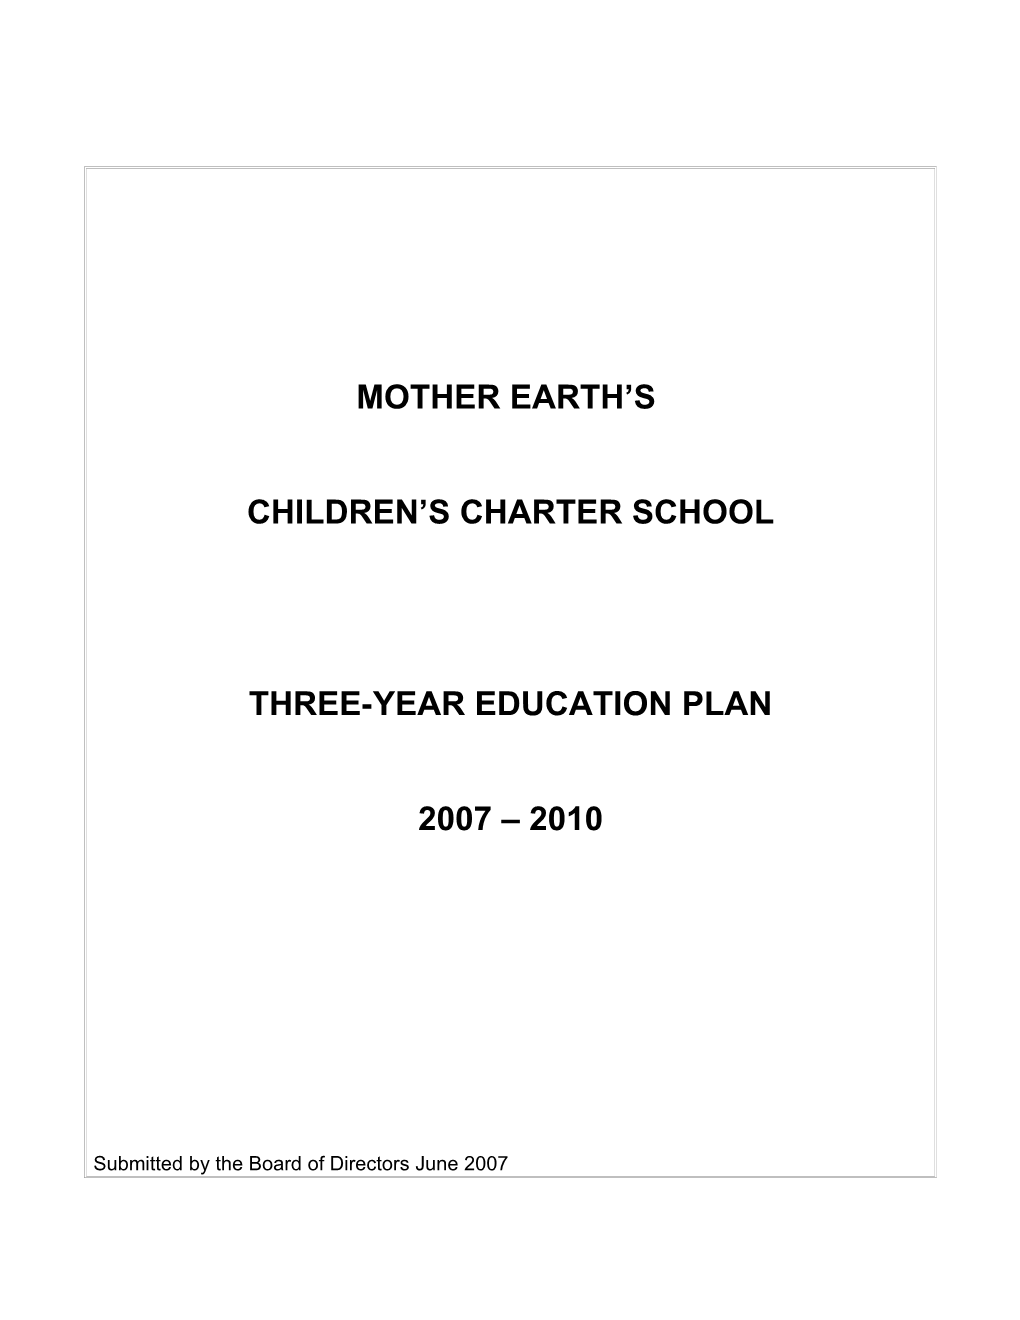 Three-Year Education Plan